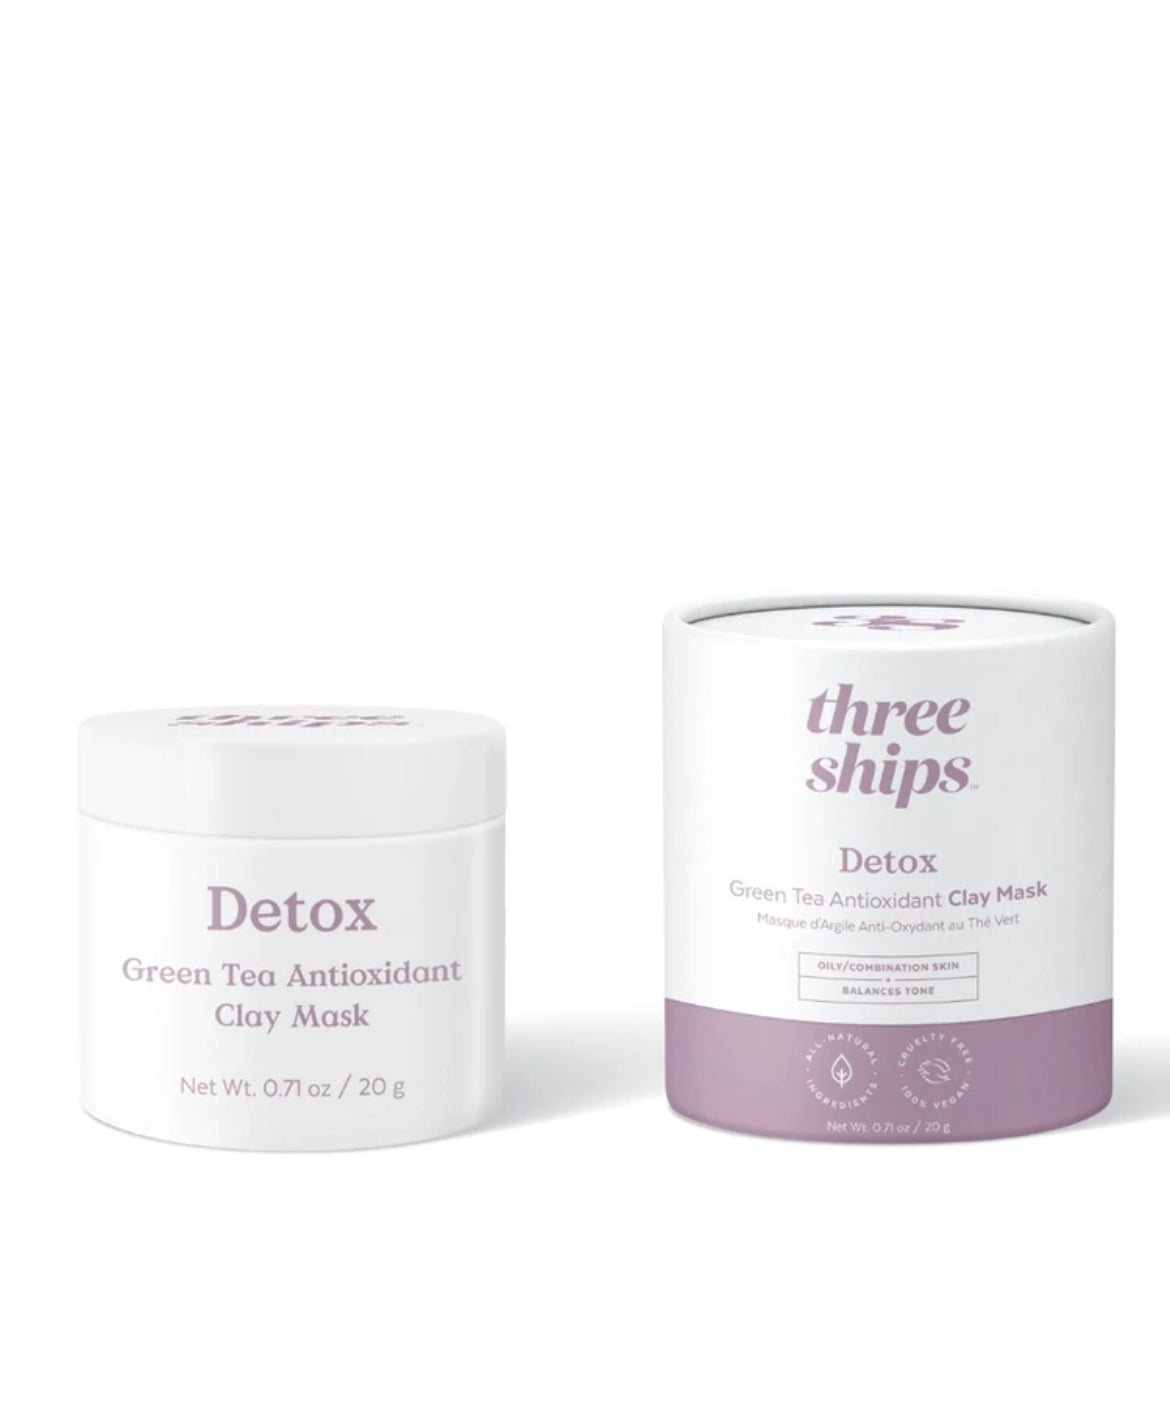 Detox Green Tea Antioxidant Clay Mask